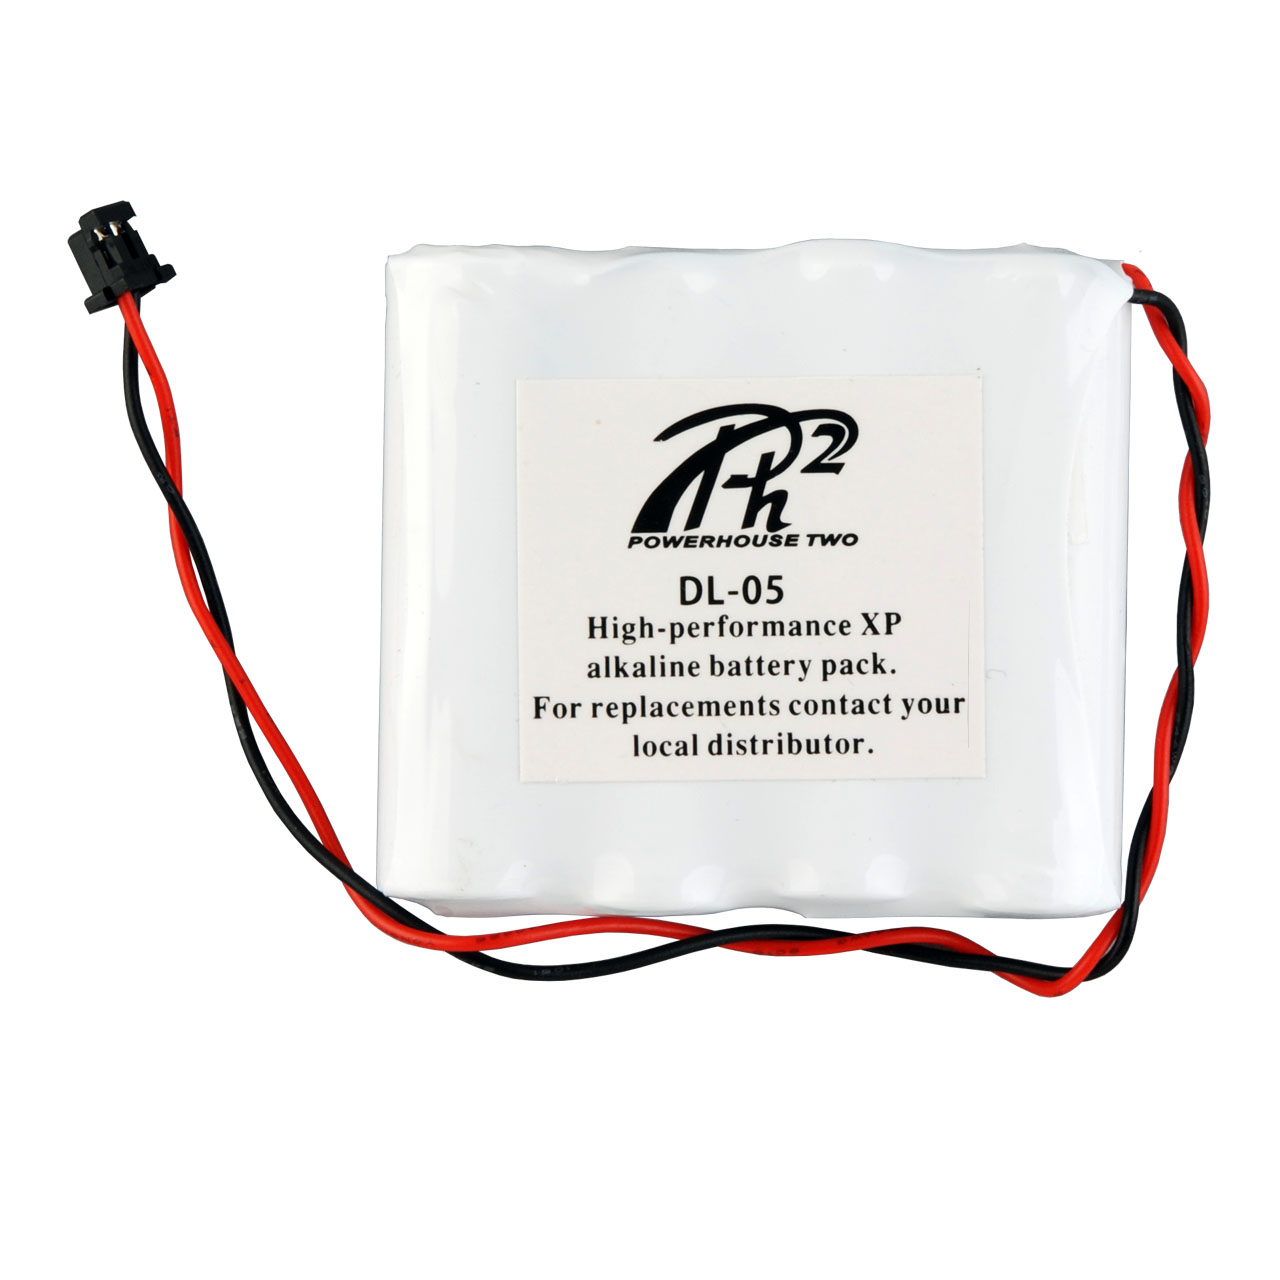 DL-05 Hospitality Battery Pack